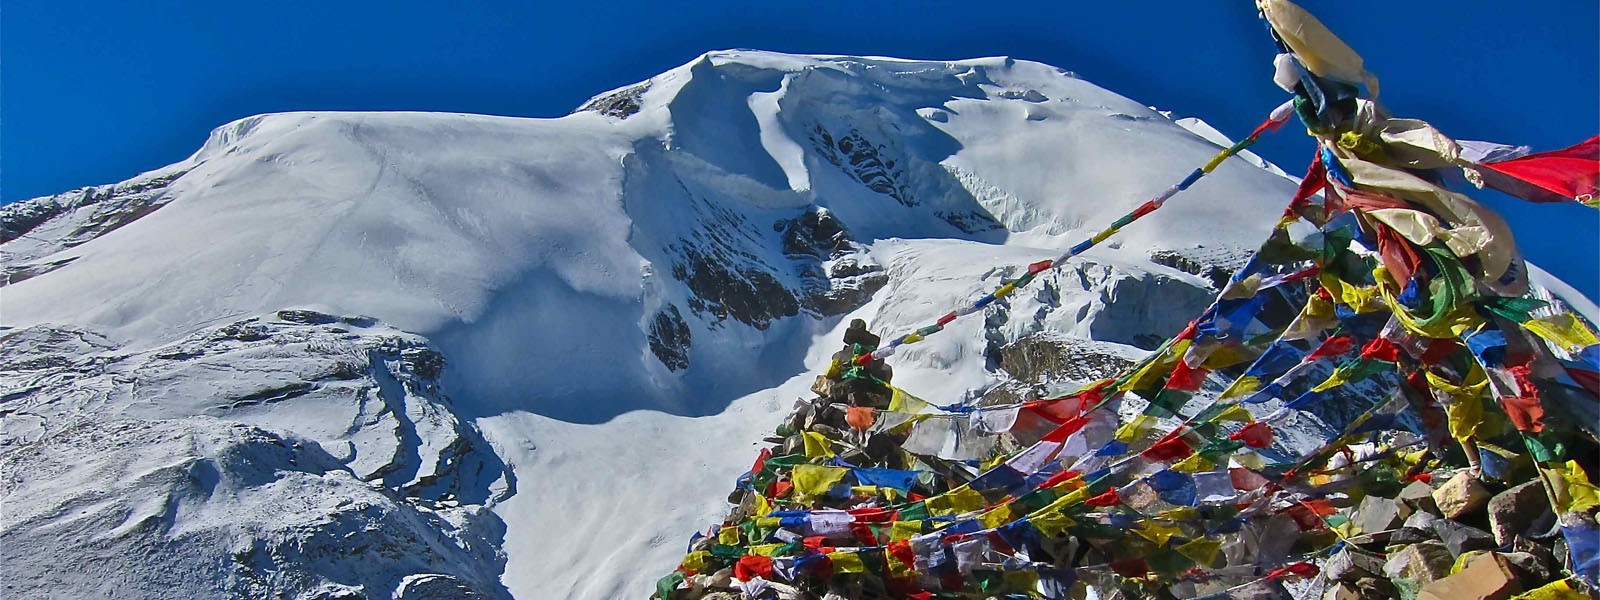 Thorung Peak Climbing in Annapurna Himalayas - Nepal